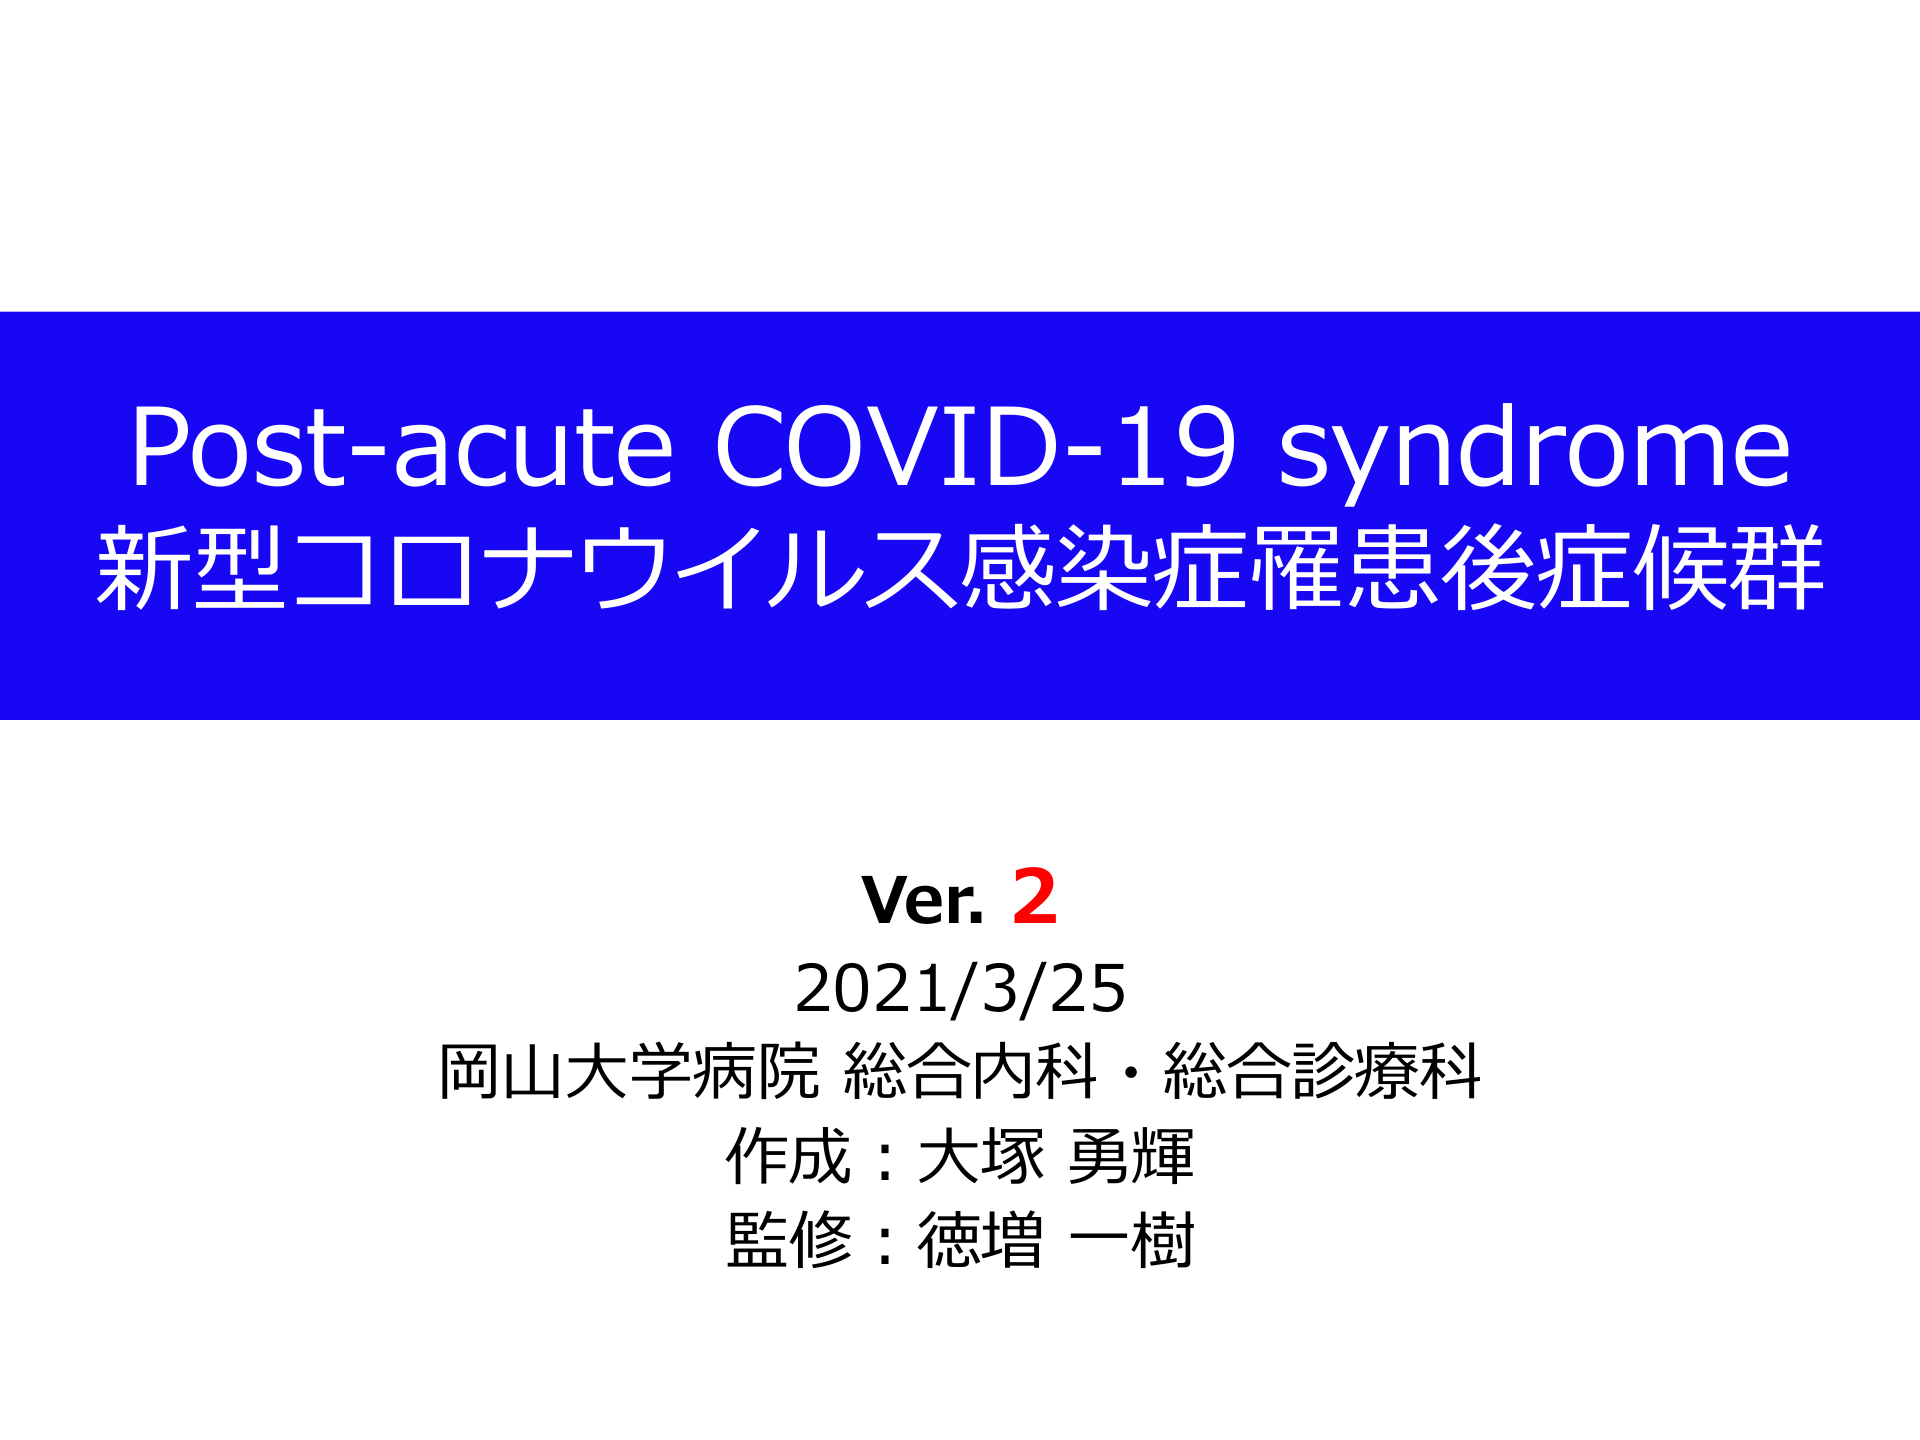 Post-acute COVID-19 Syndrome / 新型コロナウイルス感染症罹患後症候群 L1.png